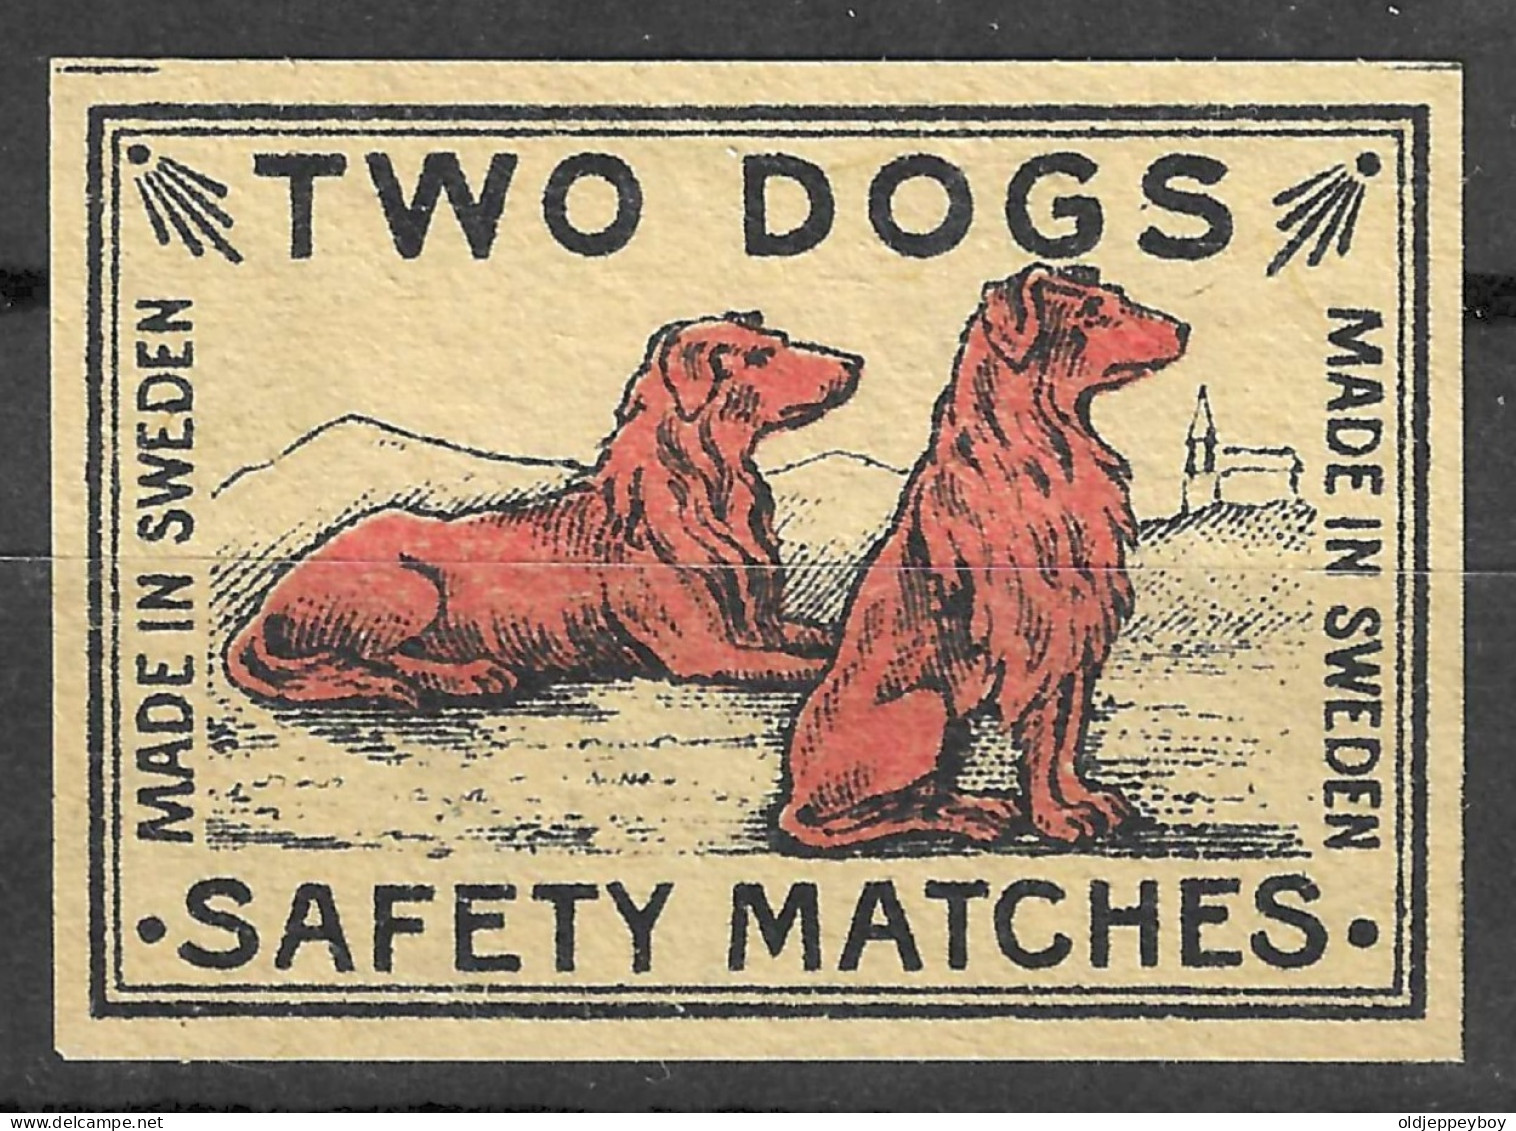 MADE IN SWEDEN VINTAGE Phillumeny MATCHBOX LABEL TWO DOGS Vintage 1930s-40s   5.5  X 3.5 CM  RARE - Zündholzschachteletiketten